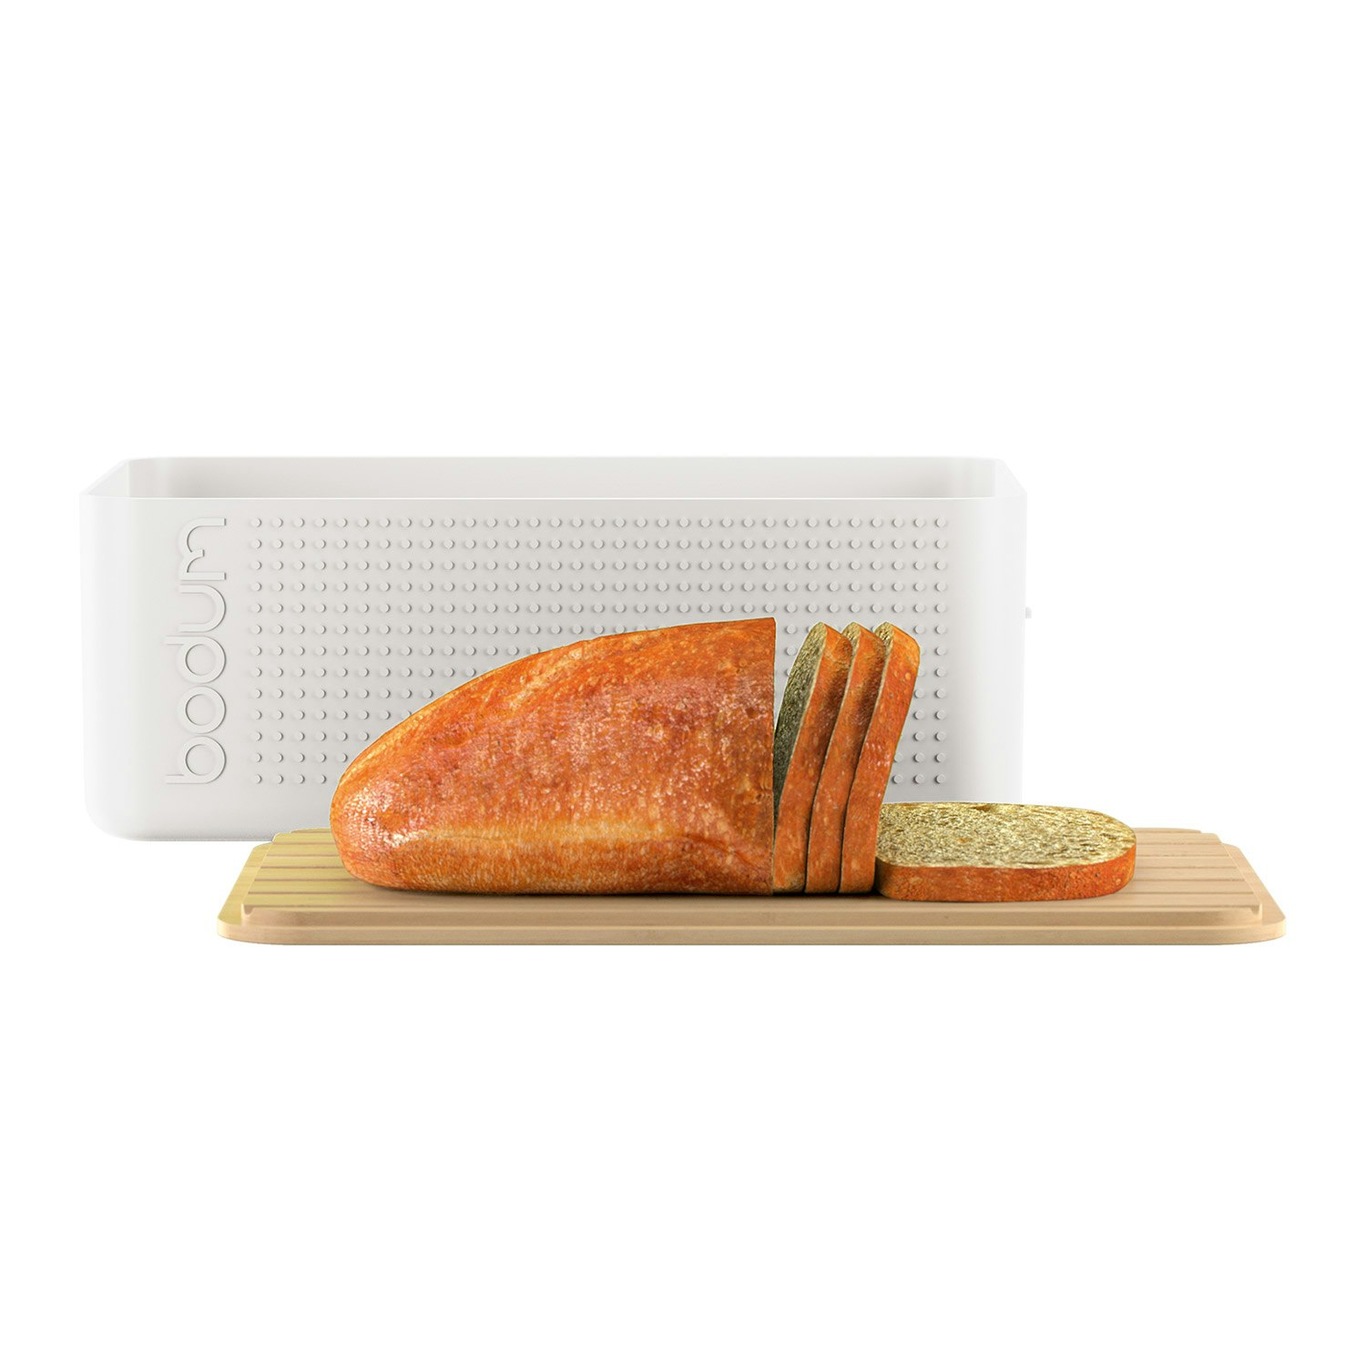 https://royaldesign.com/image/2/bodum-bistro-bread-box-small-1?w=800&quality=80